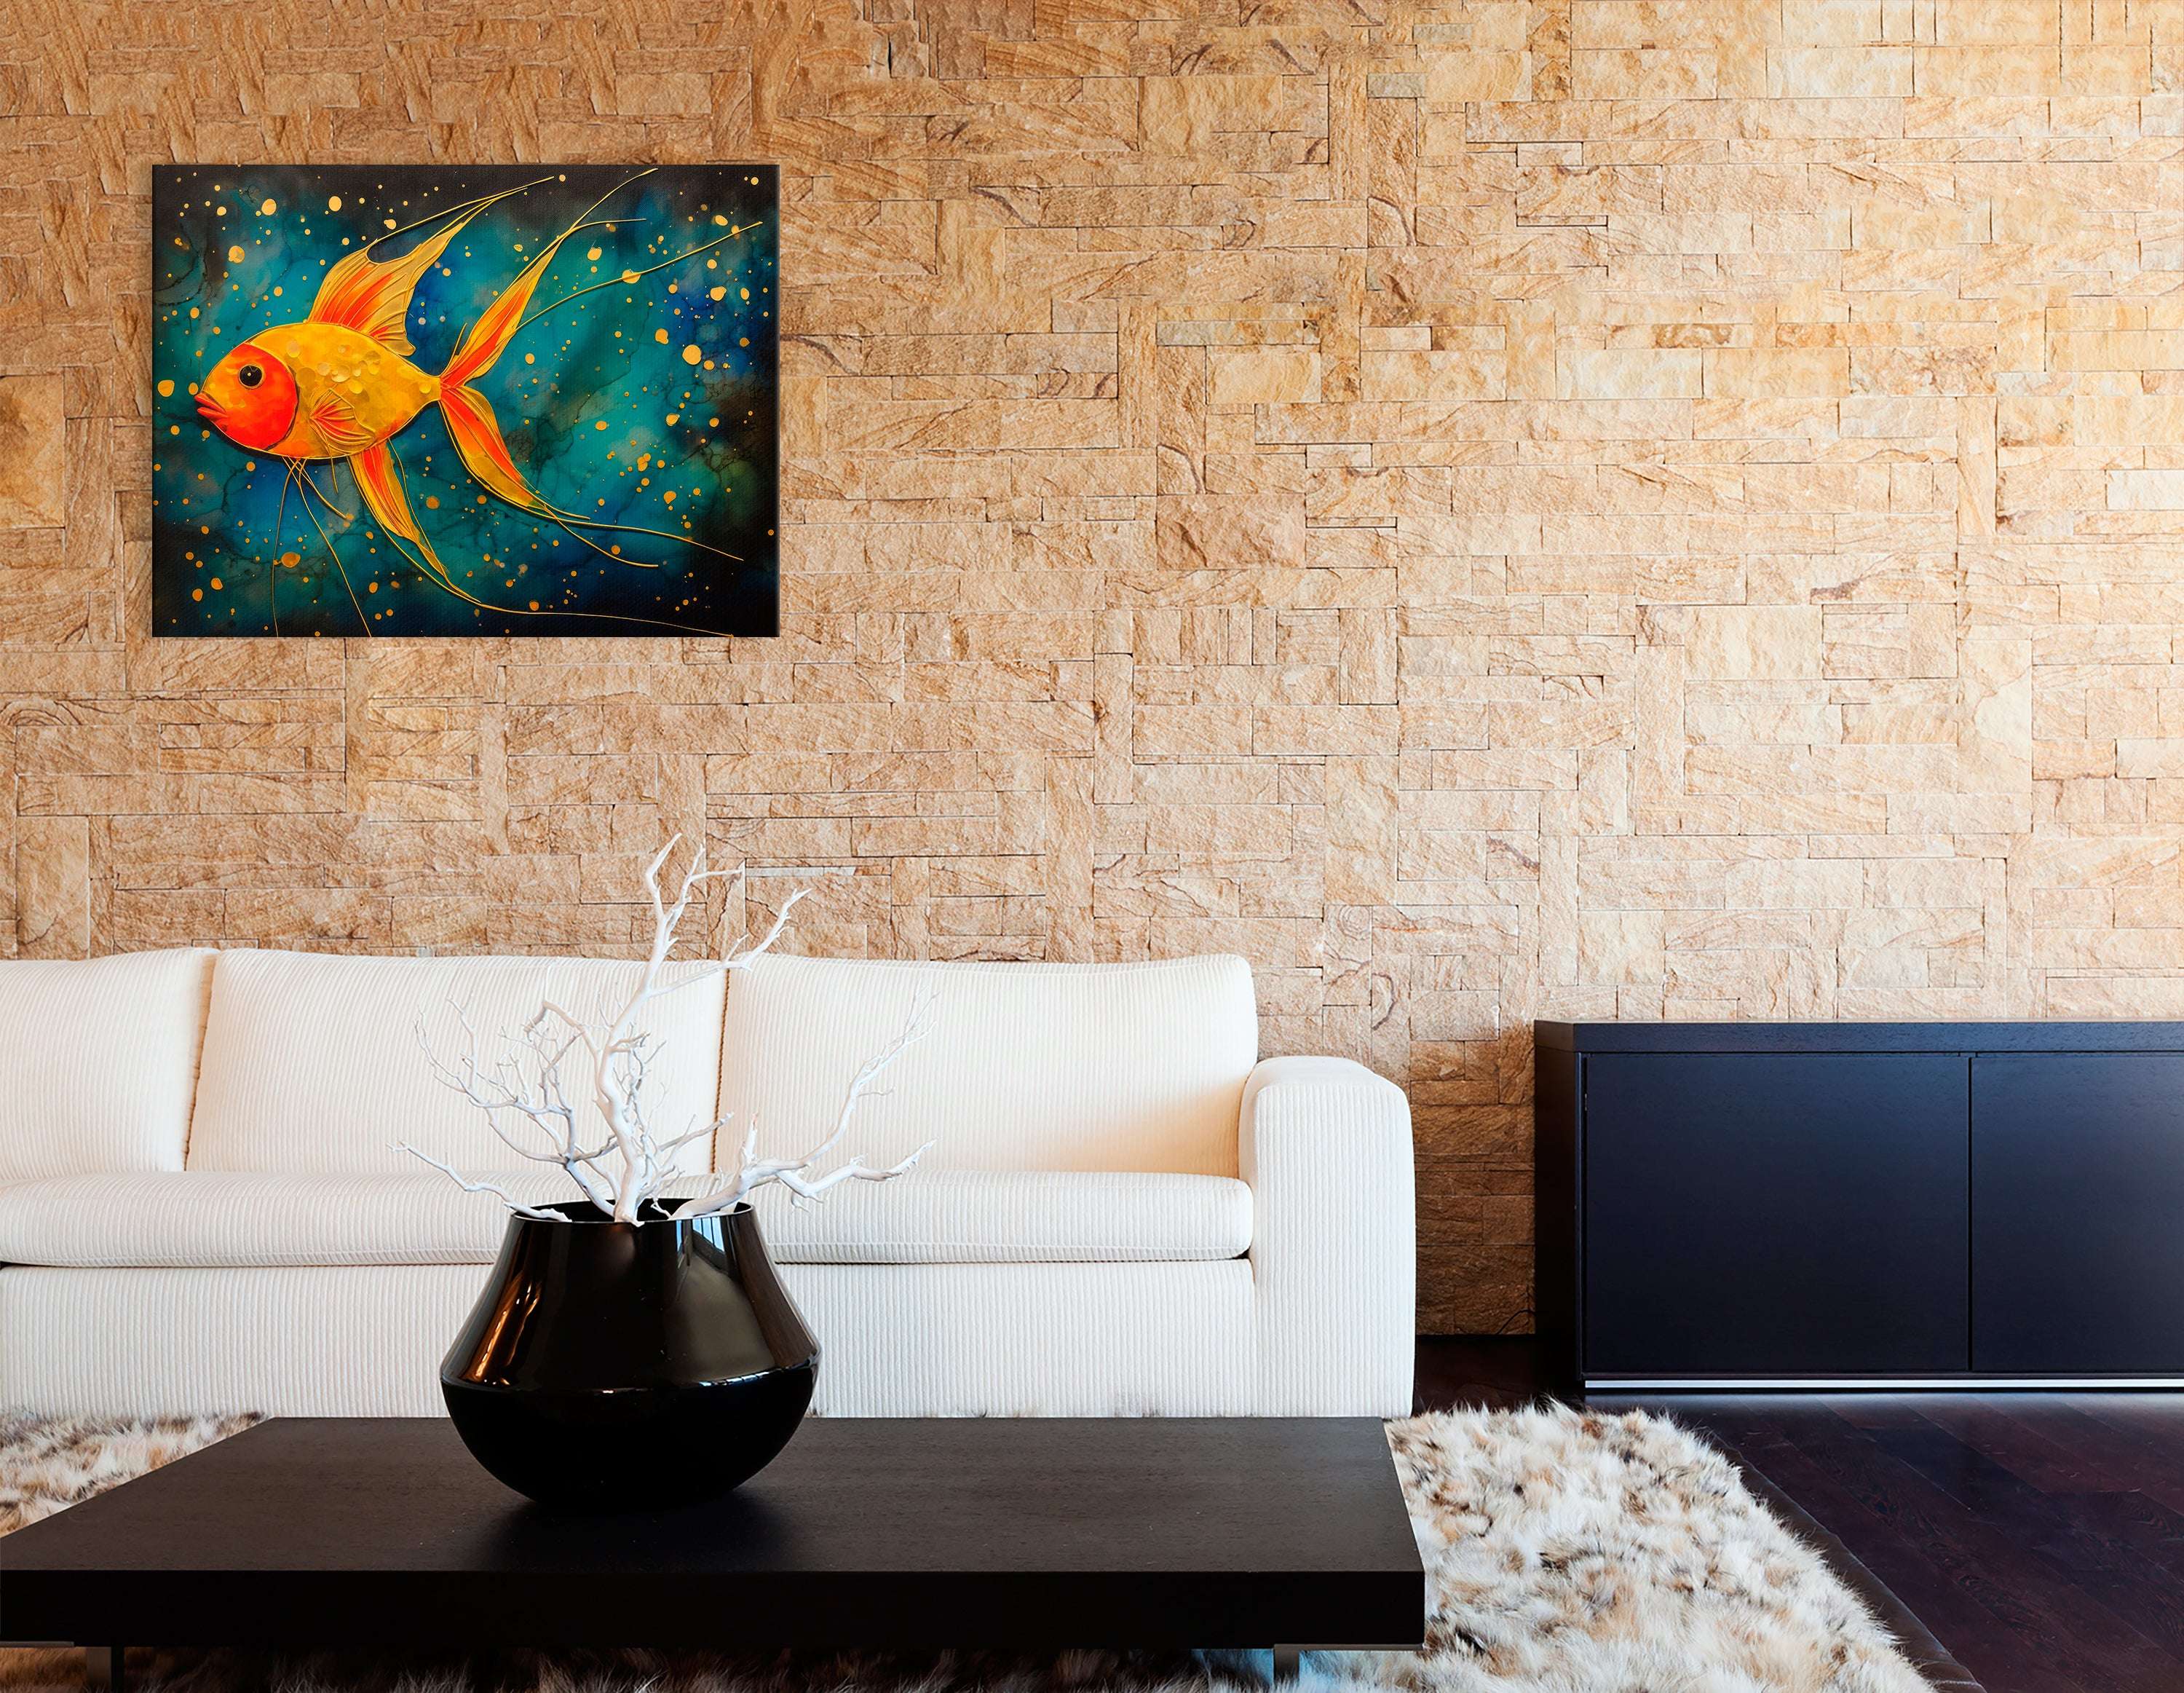 Magical Gold Fish in a Dark Blue Sea - Canvas Print - Artoholica Ready to Hang Canvas Print